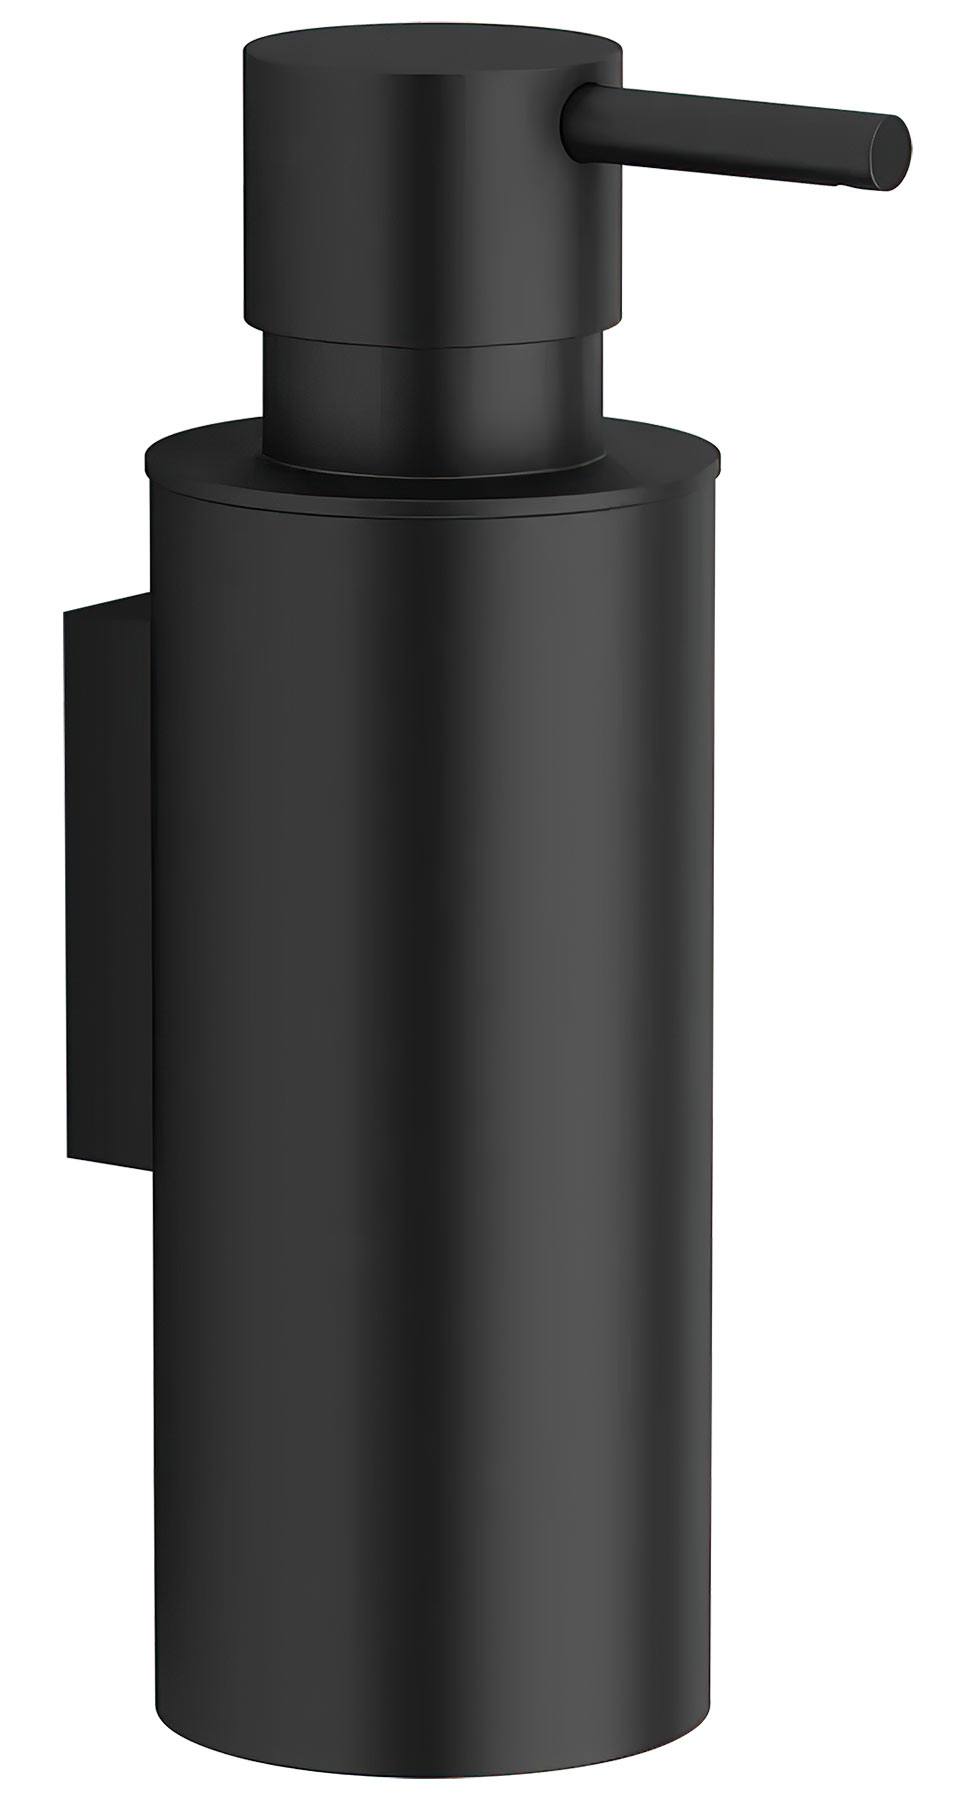 Диспенсер для жидкого мыла Langberger Black Edition 73569-BP сенсорный наливной диспенсер для мыла пены лайма